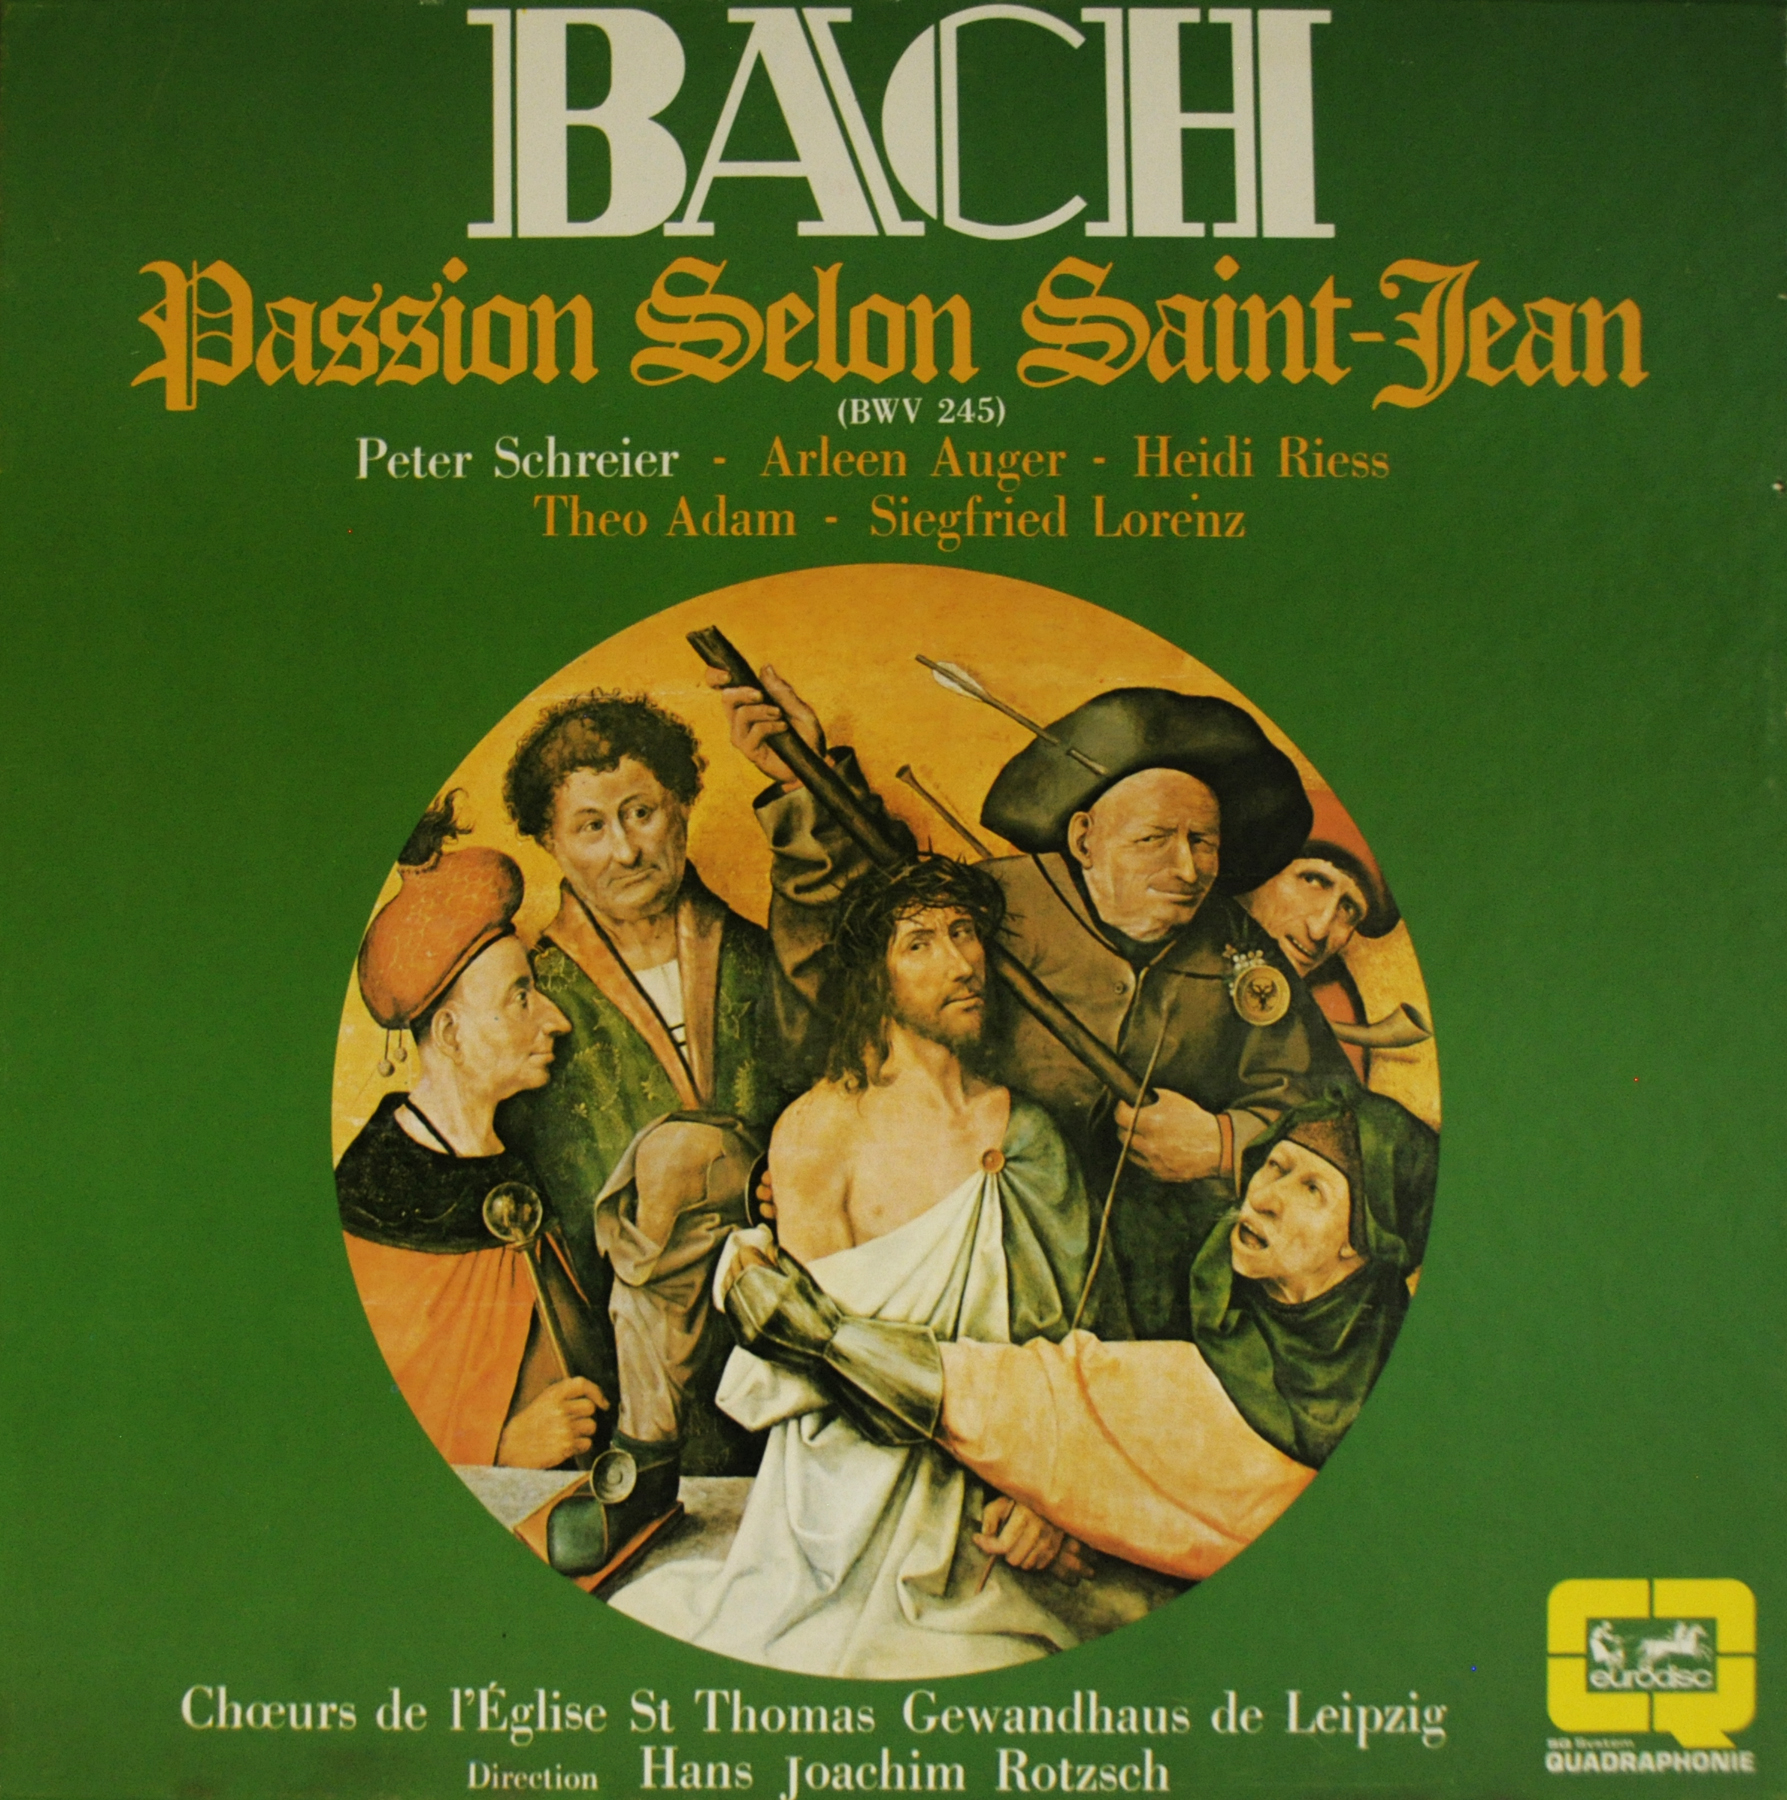 Acheter disque vinyle BACH Johann-Sebastian - Hans Joaquim Rotzsch Passion selon Saint-Jean a vendre